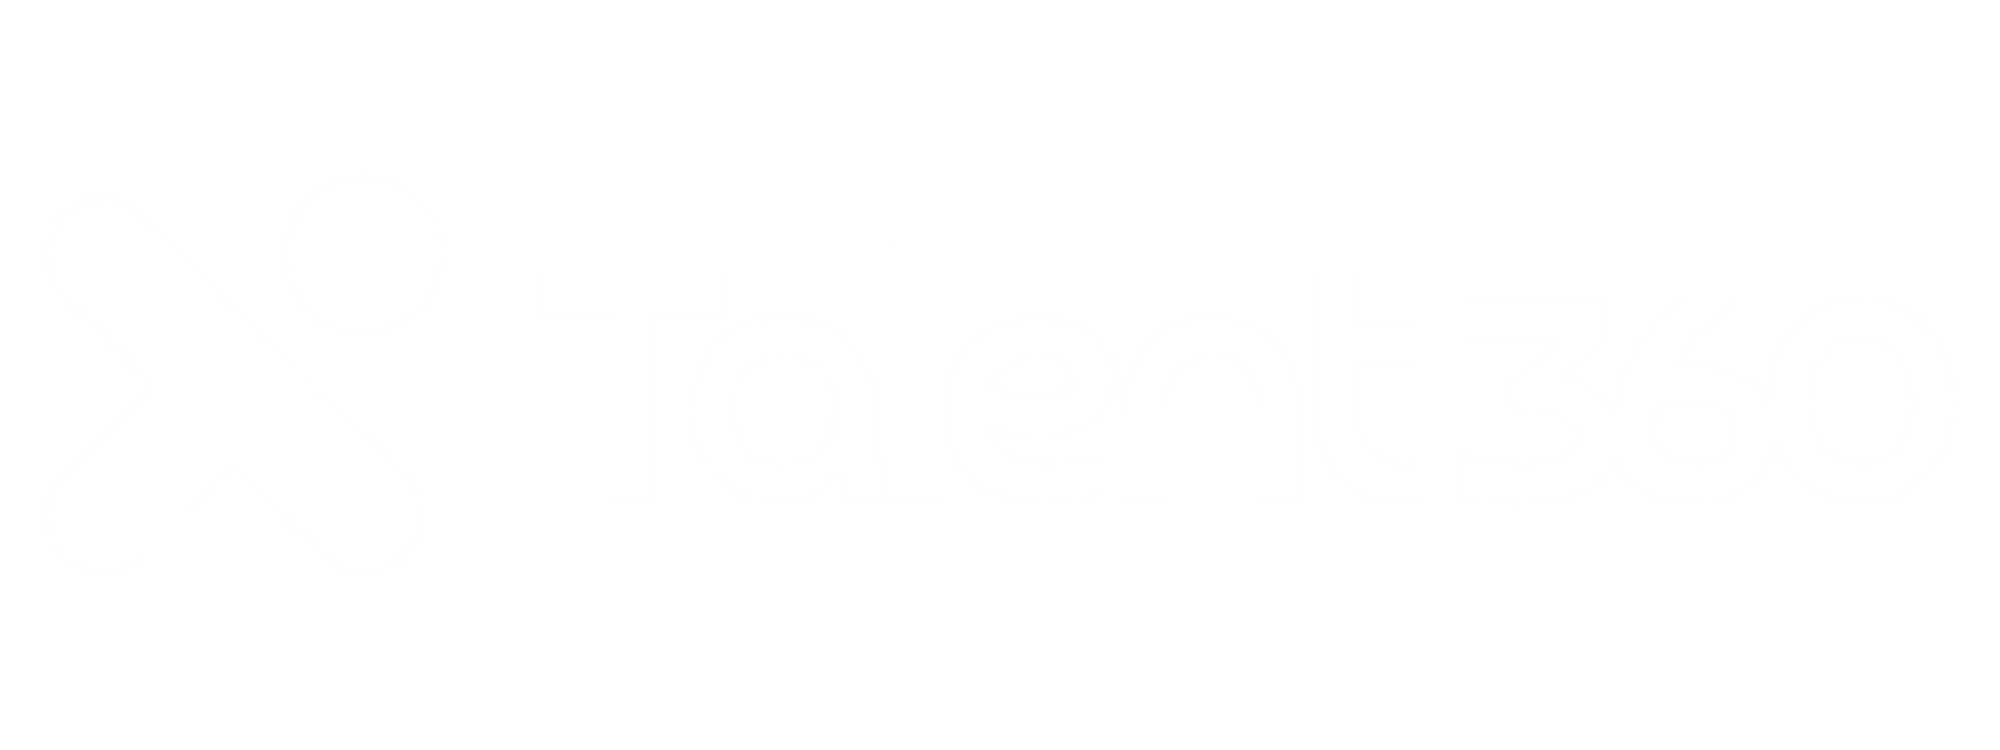 Logo Talent360 Blanco